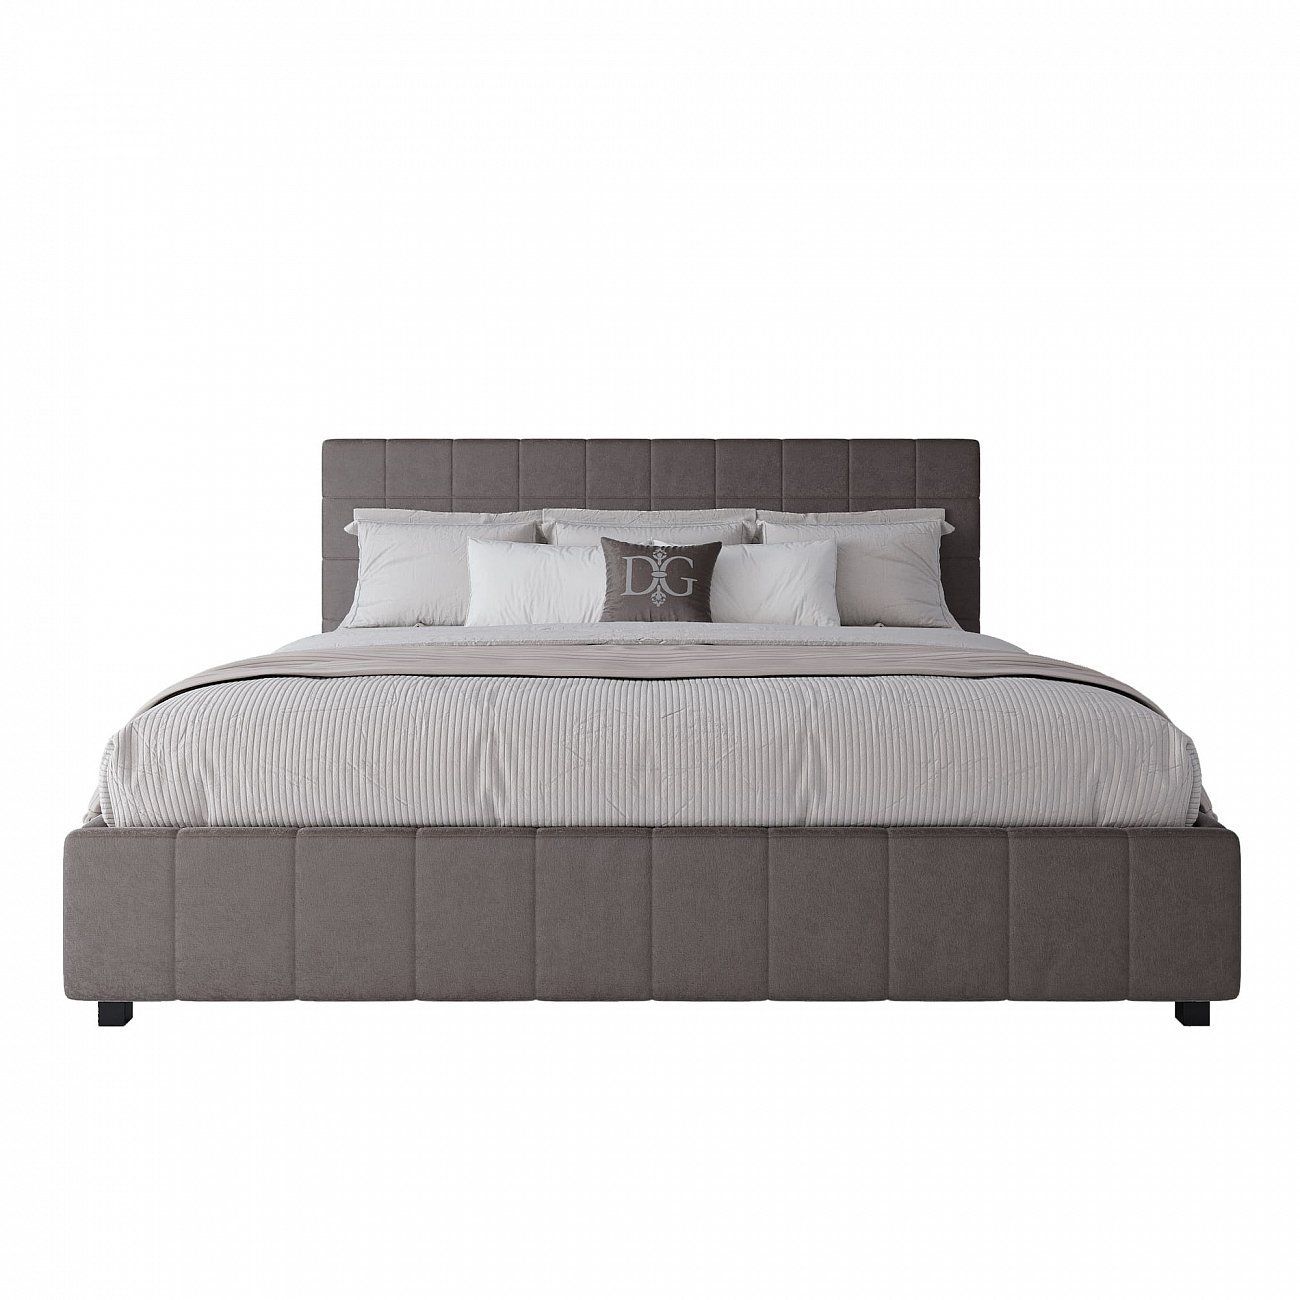 Euro bed 200x200 cm gray-brown Shining Modern